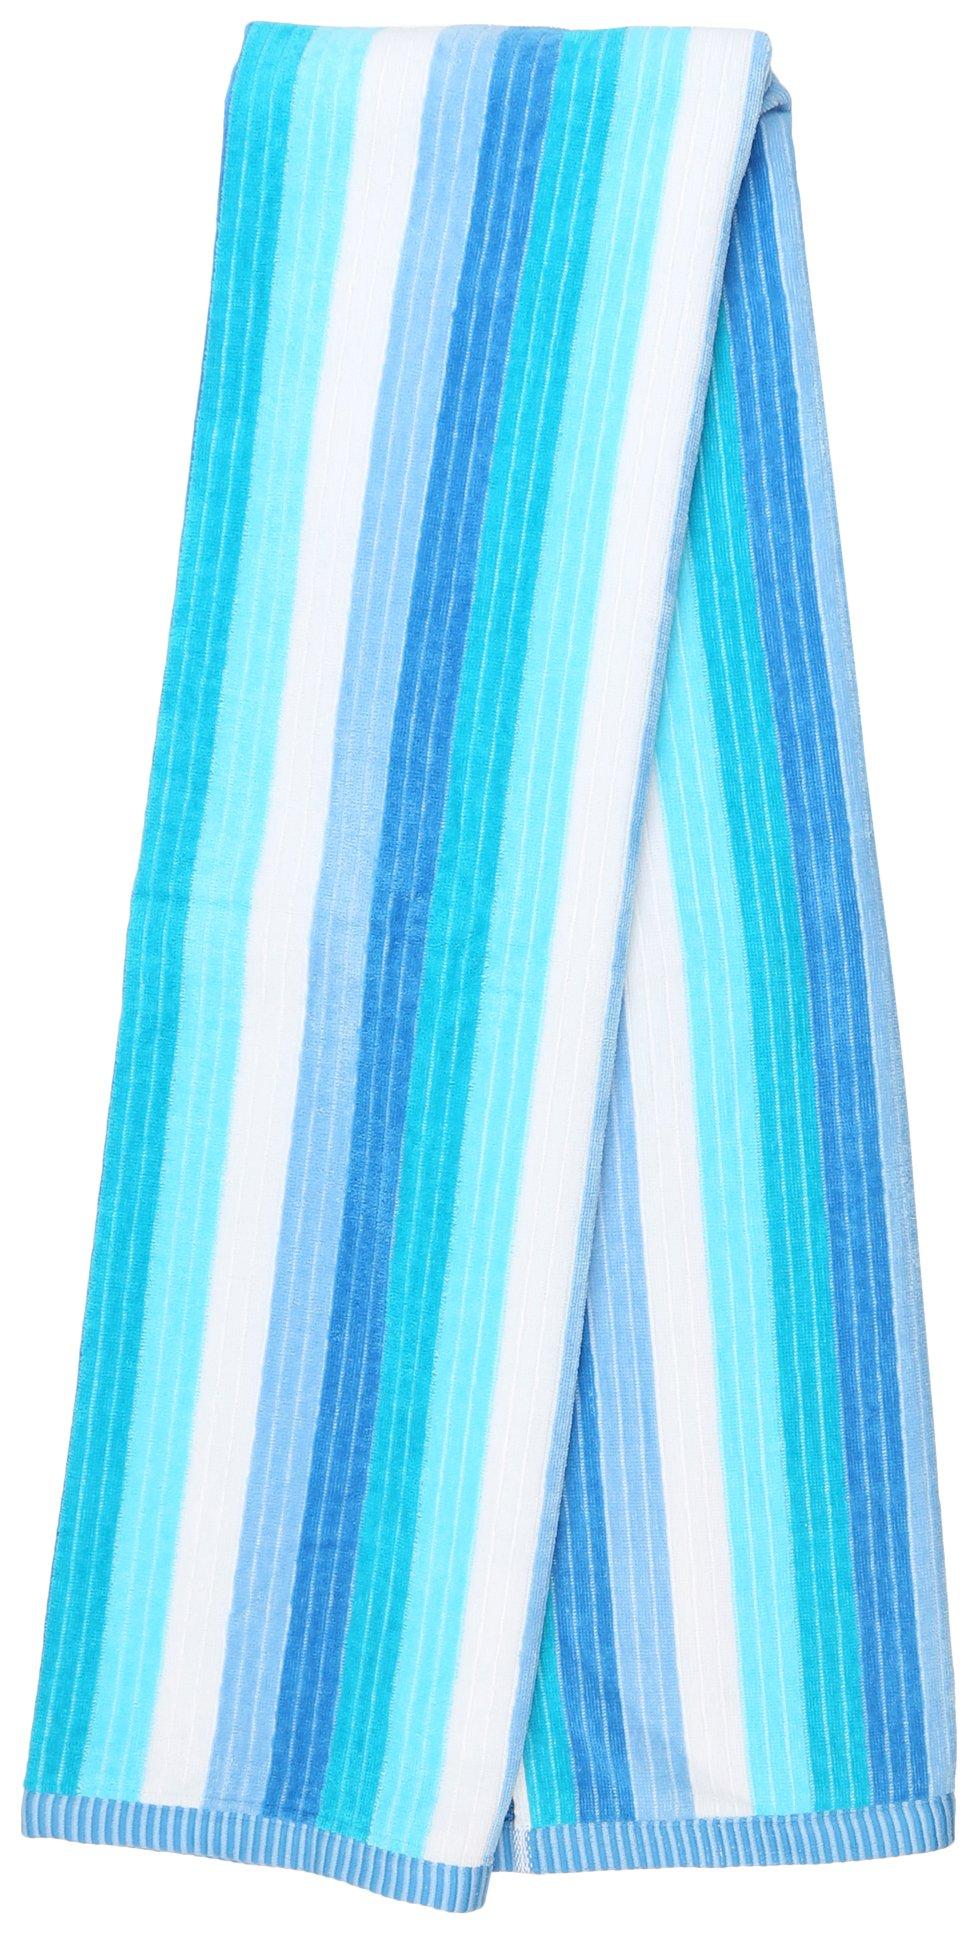 Coastal Home 36x68 Striped Beach Towel